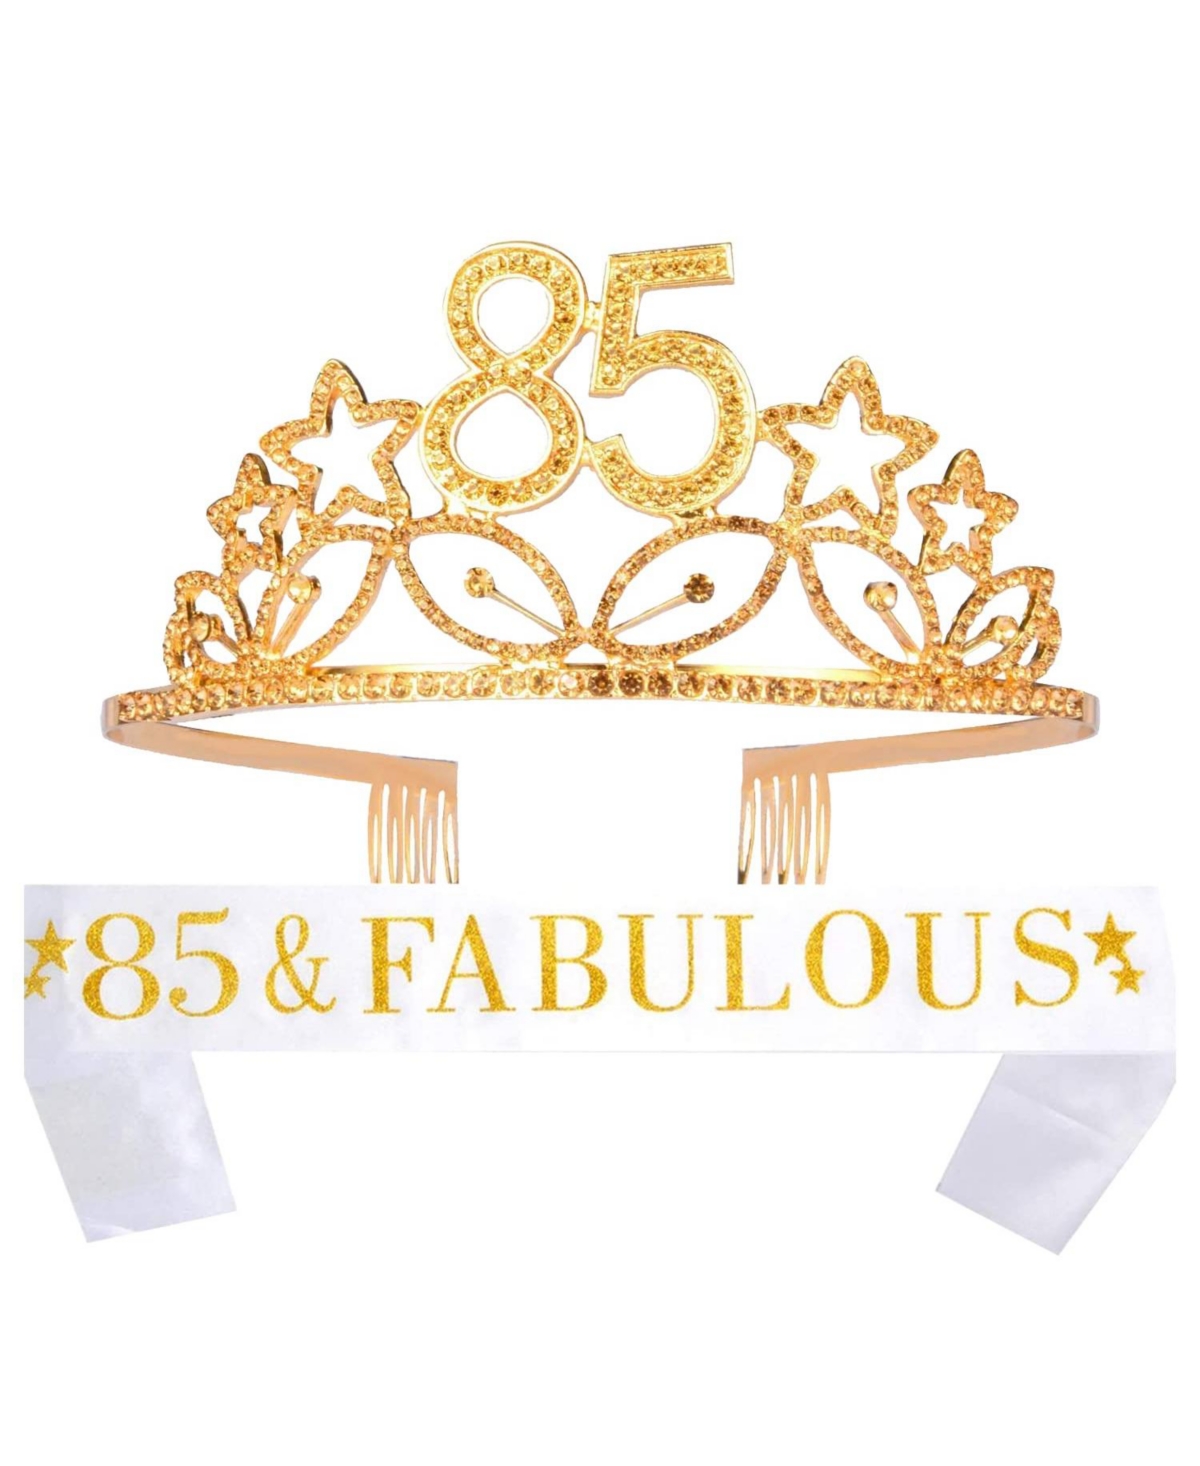 85th Birthday Sash and Tiara for Women - Fabulous Glitter Sash + Stars Rhinestone Premium Metal Tiara for Her, 85th Birthday Gifts for 85 Celebration